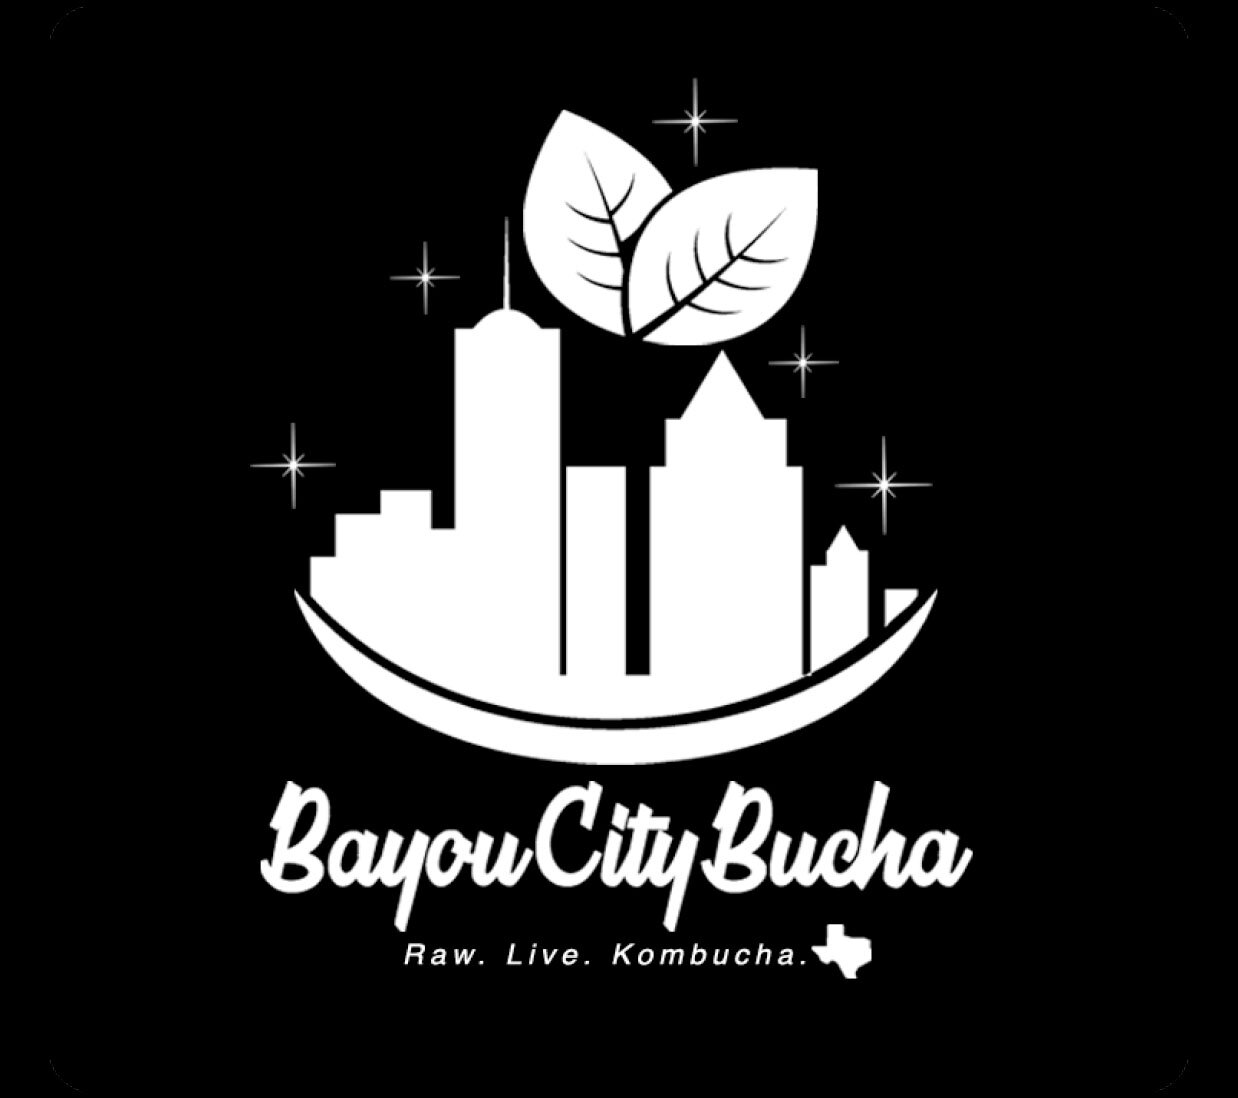 Bayou City Bucha